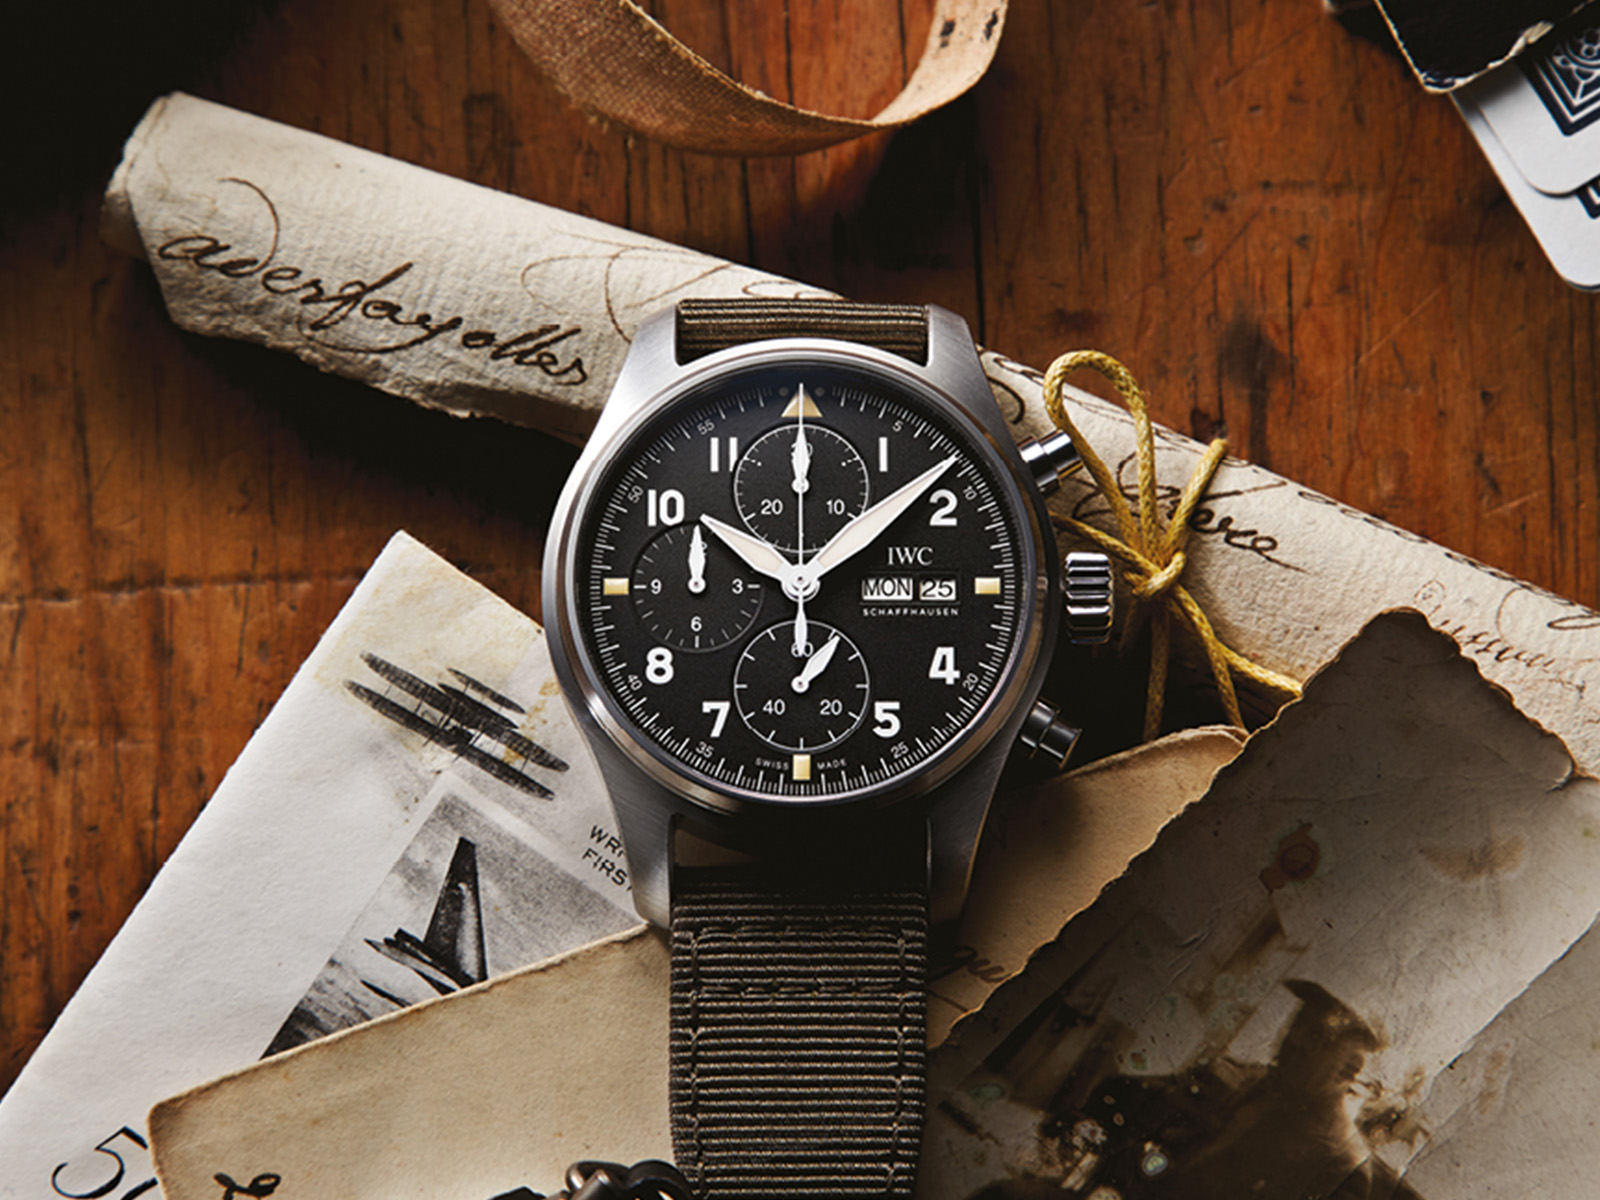 The IWC Pilot's Watch Chronograph Spitfire